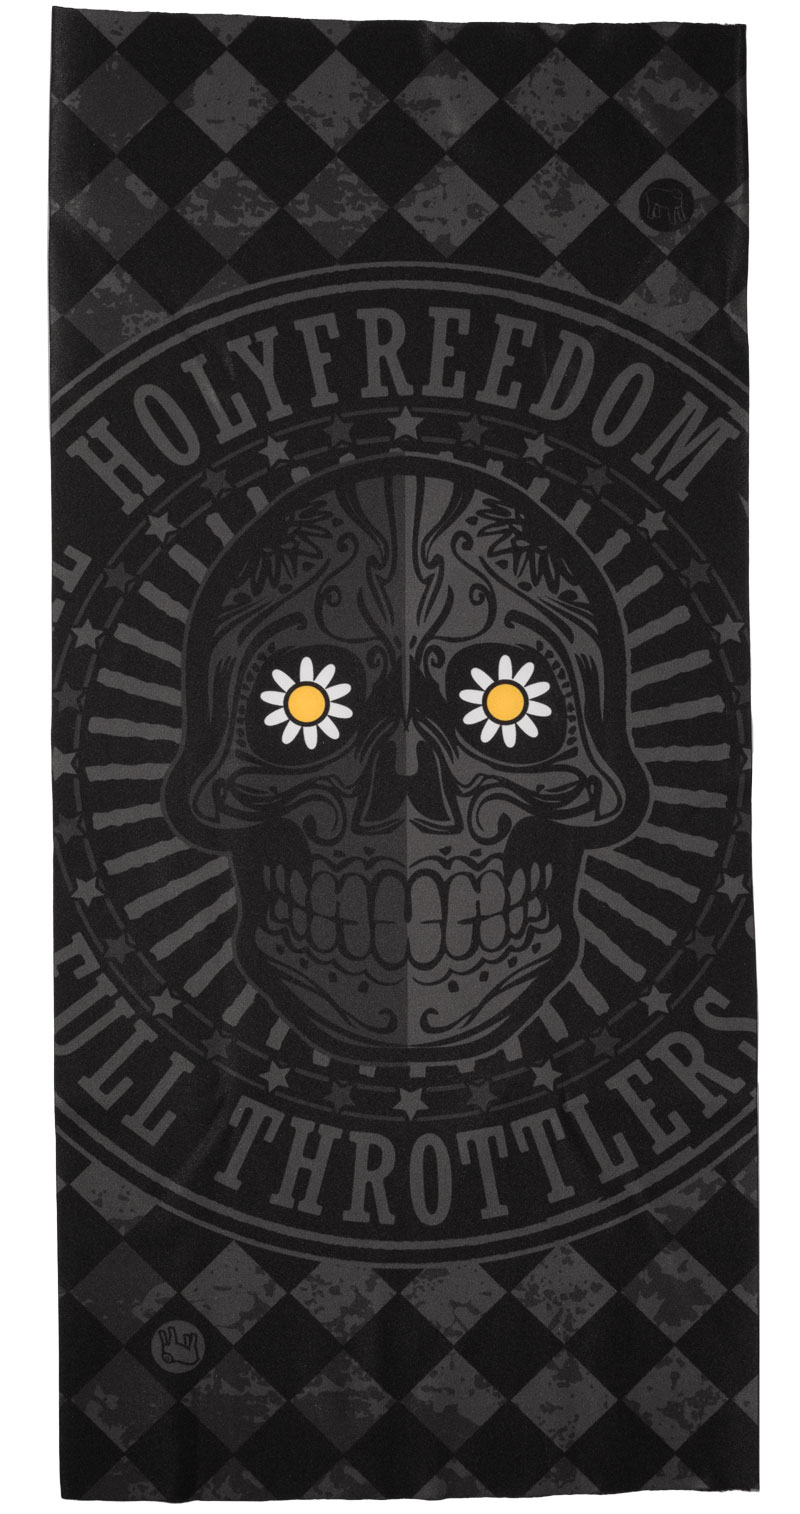 Tour De Cou Irongun Skull stretch - Holy Freedom Noir/Gris Taille